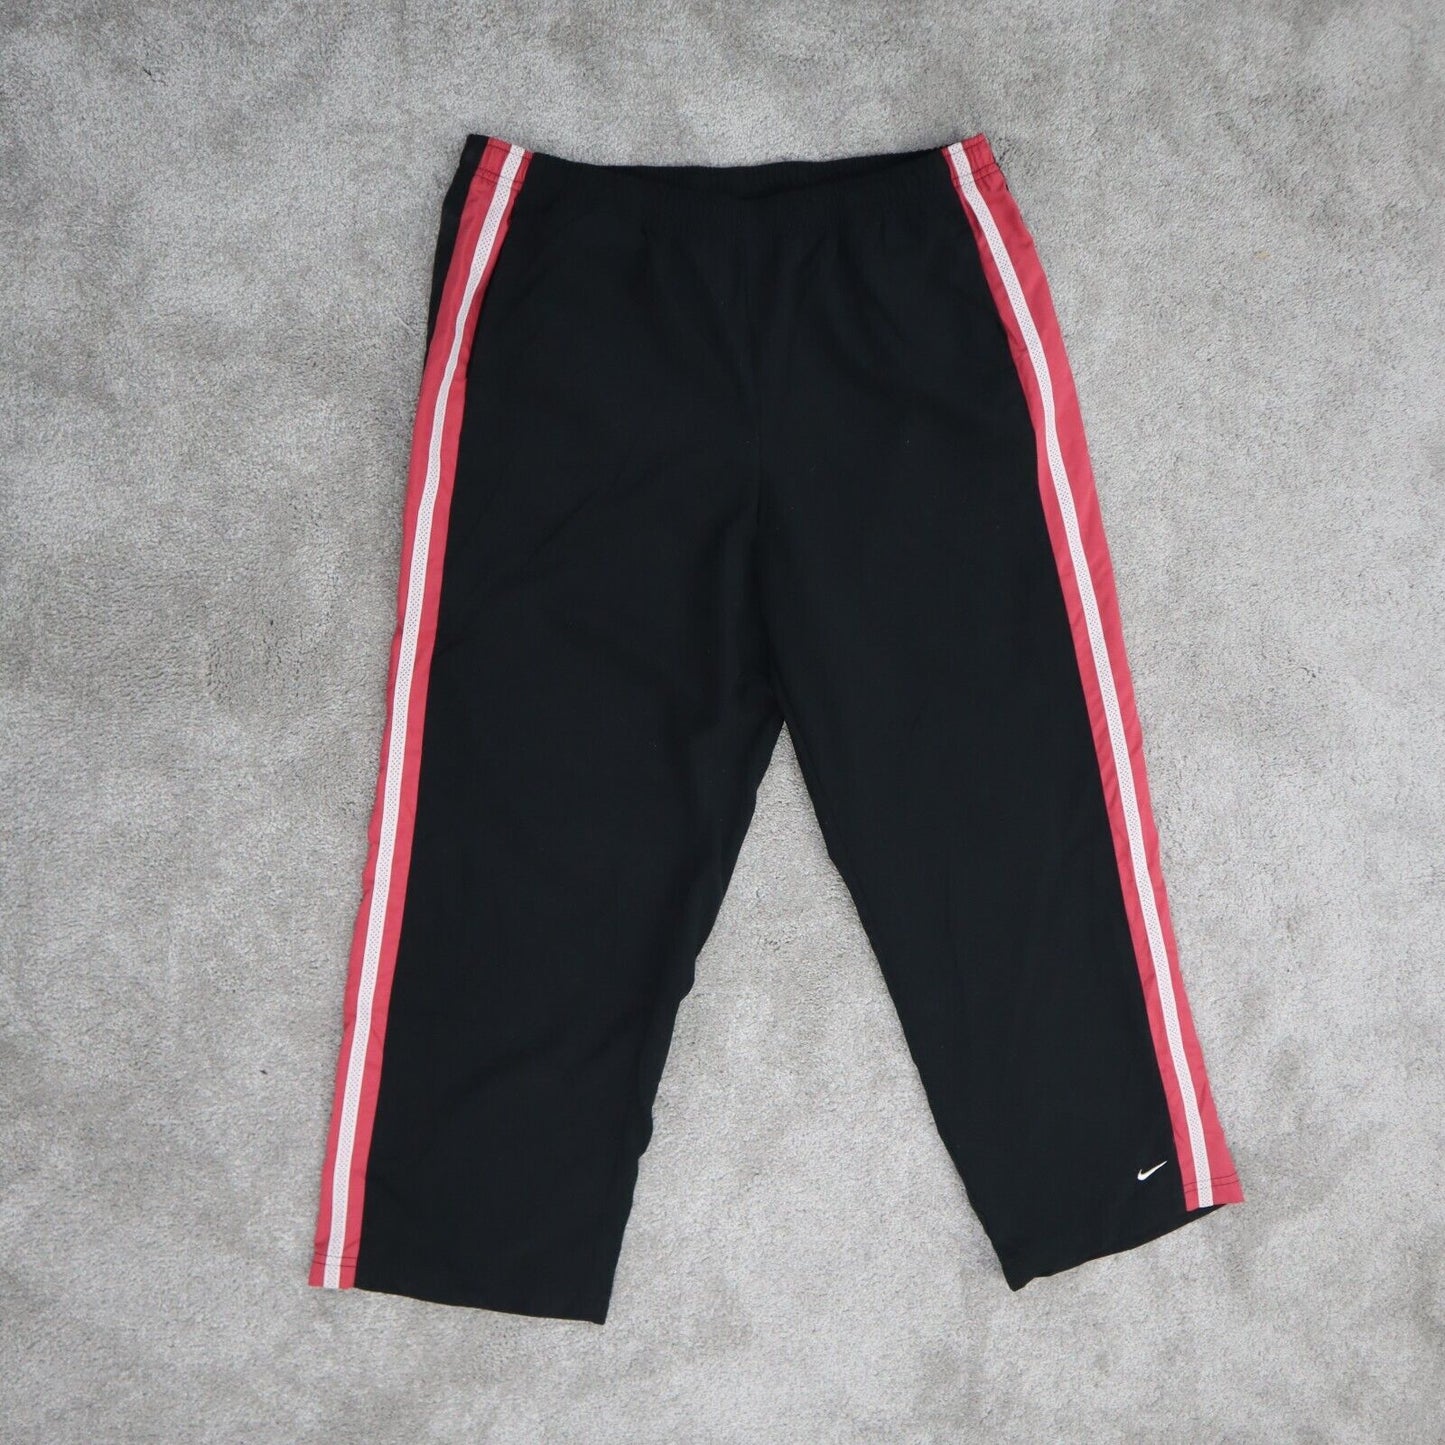 Adidas Pants Mens Black L Pink/white 3 Striped Wide Leg Elastic Waist Sweatpants